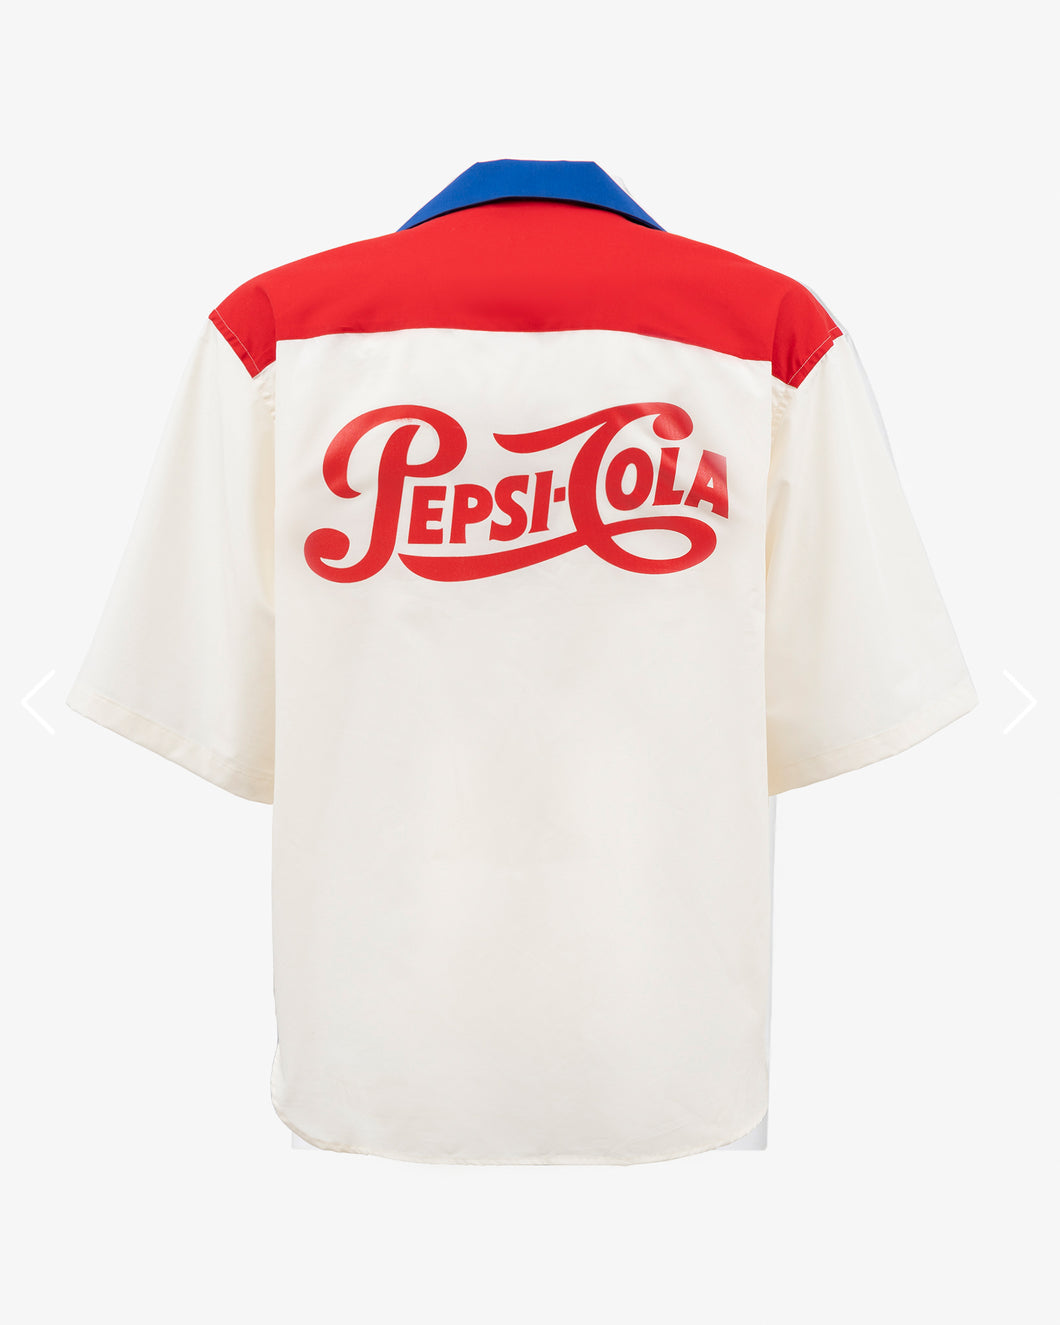 Gcds x Pepsi Bowling Shirt